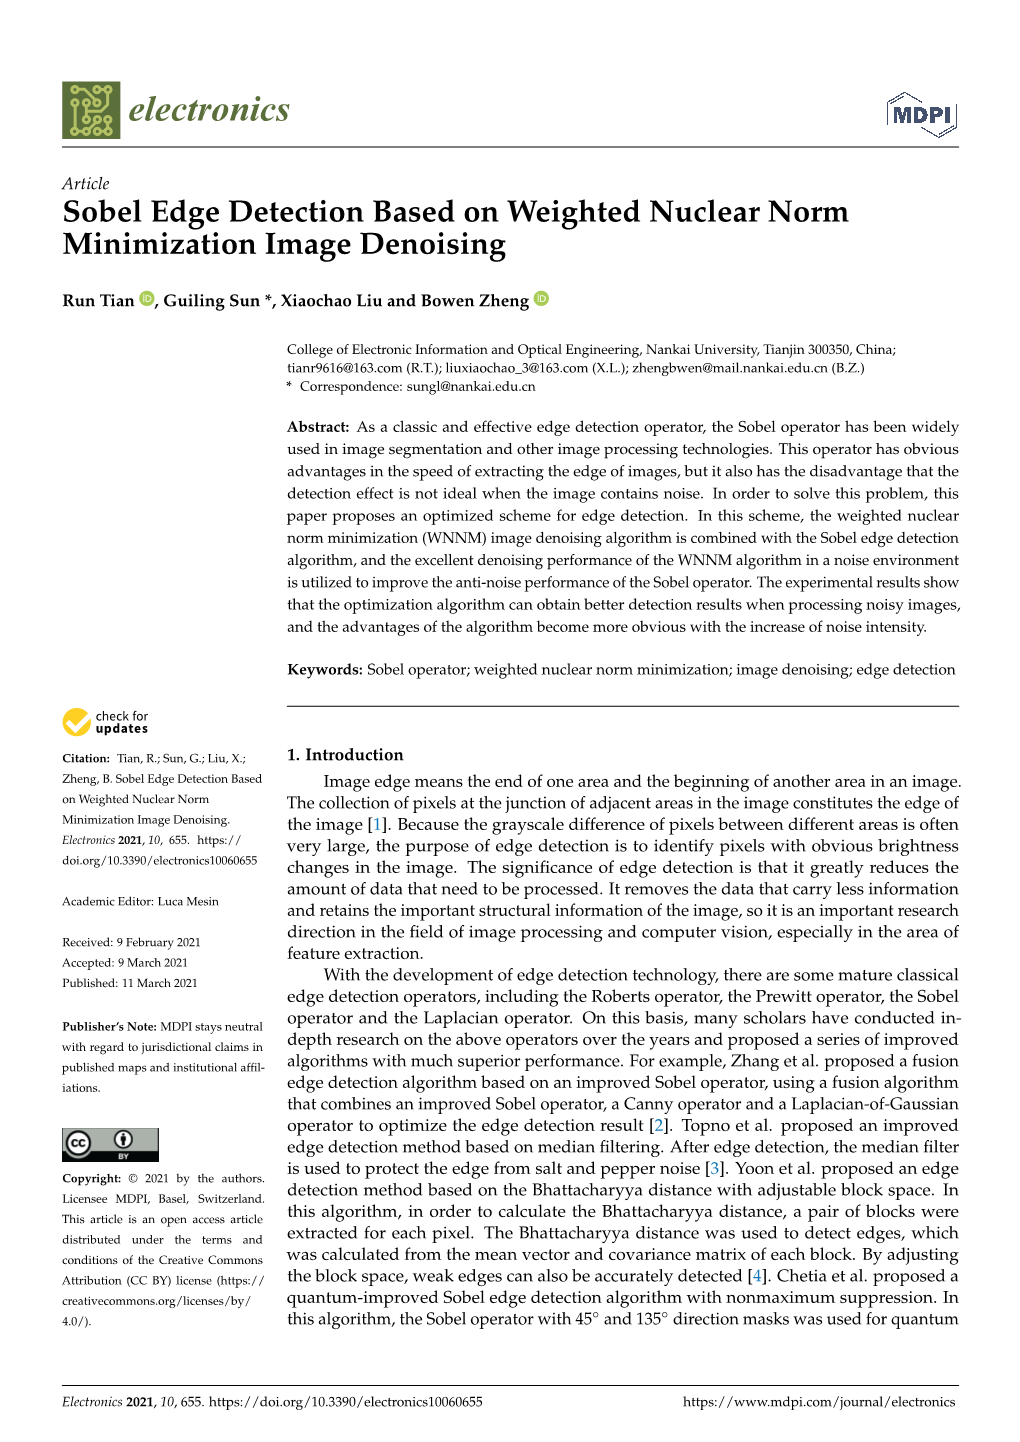 Sobel Edge Detection Based on Weighted Nuclear Norm Minimization Image Denoising